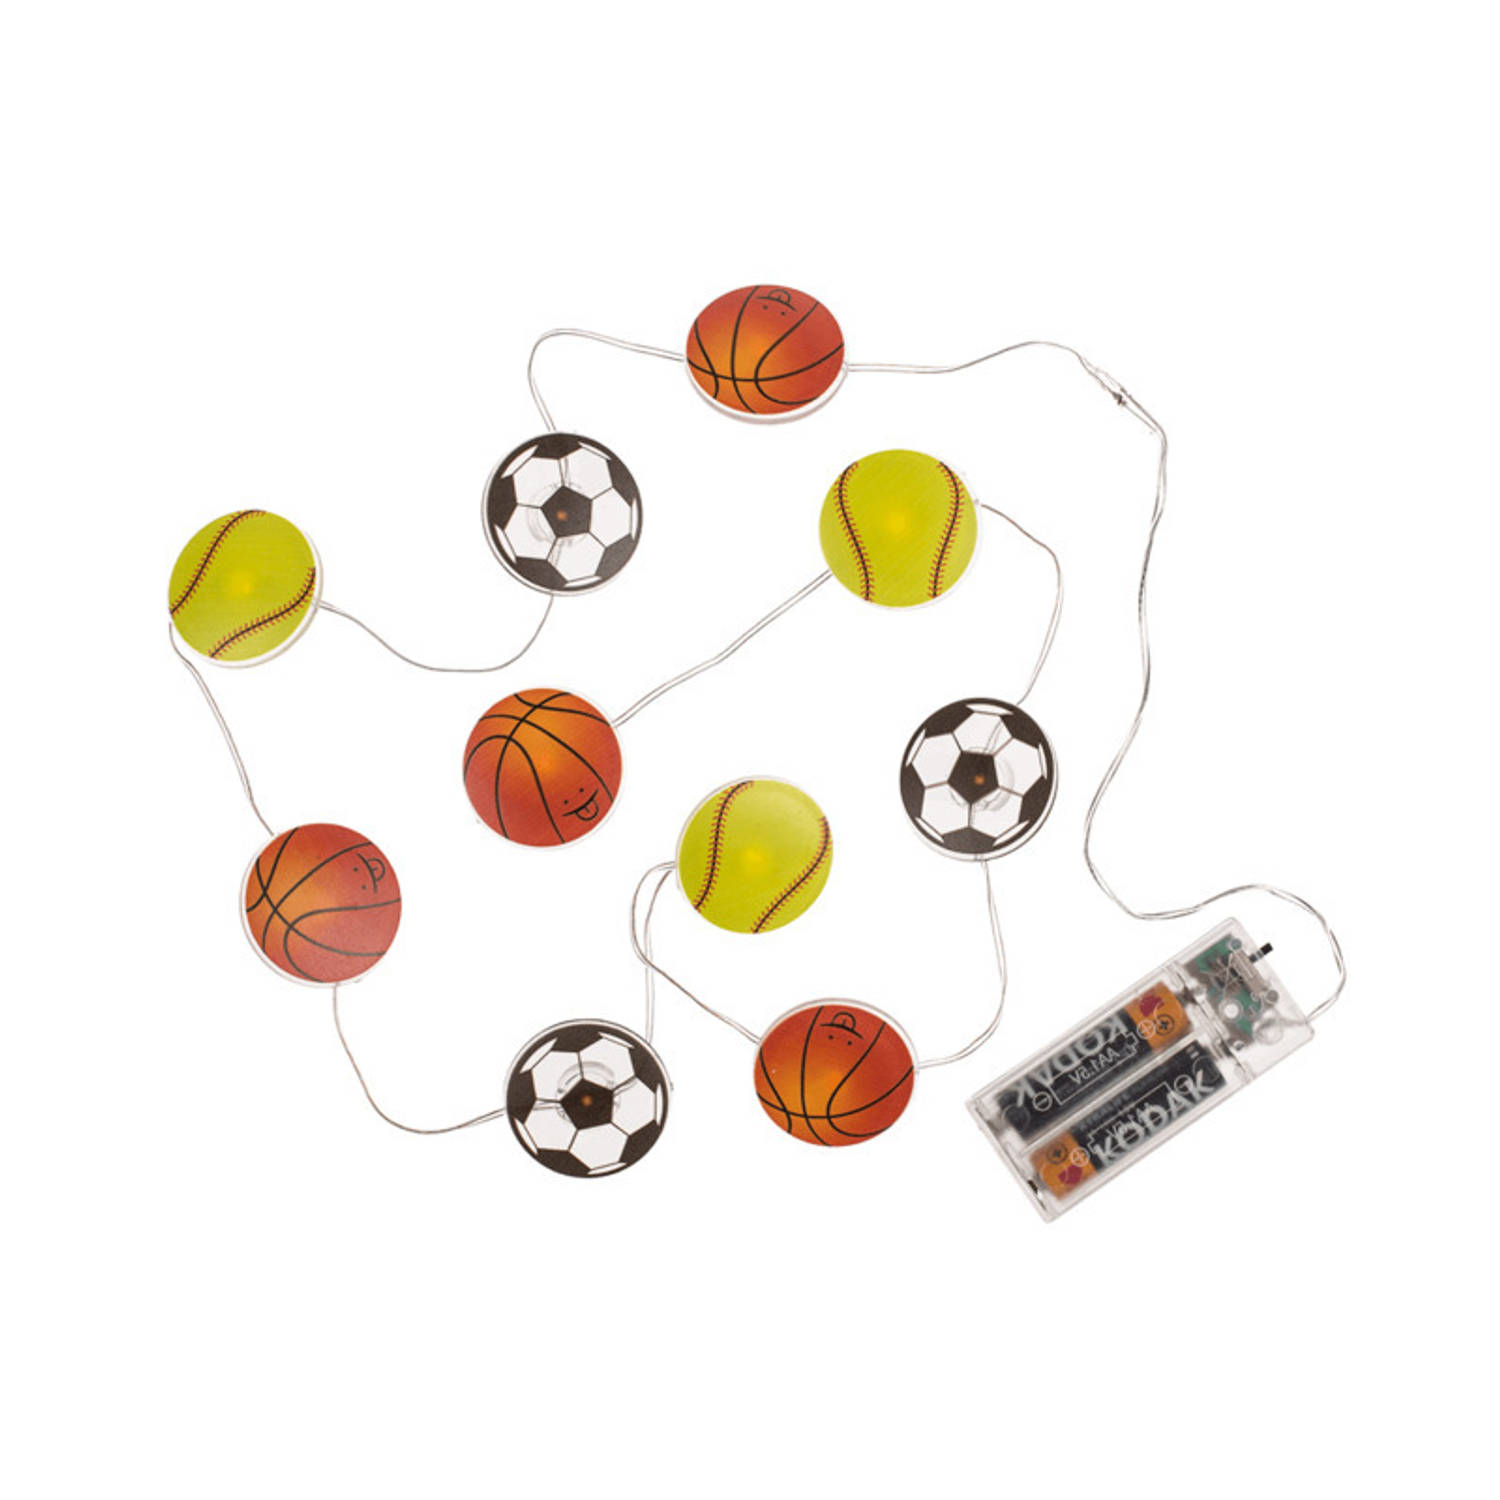 Lichtsnoer - sport thema - 160 cm - op batterij - voetbal, tennis, basketbal